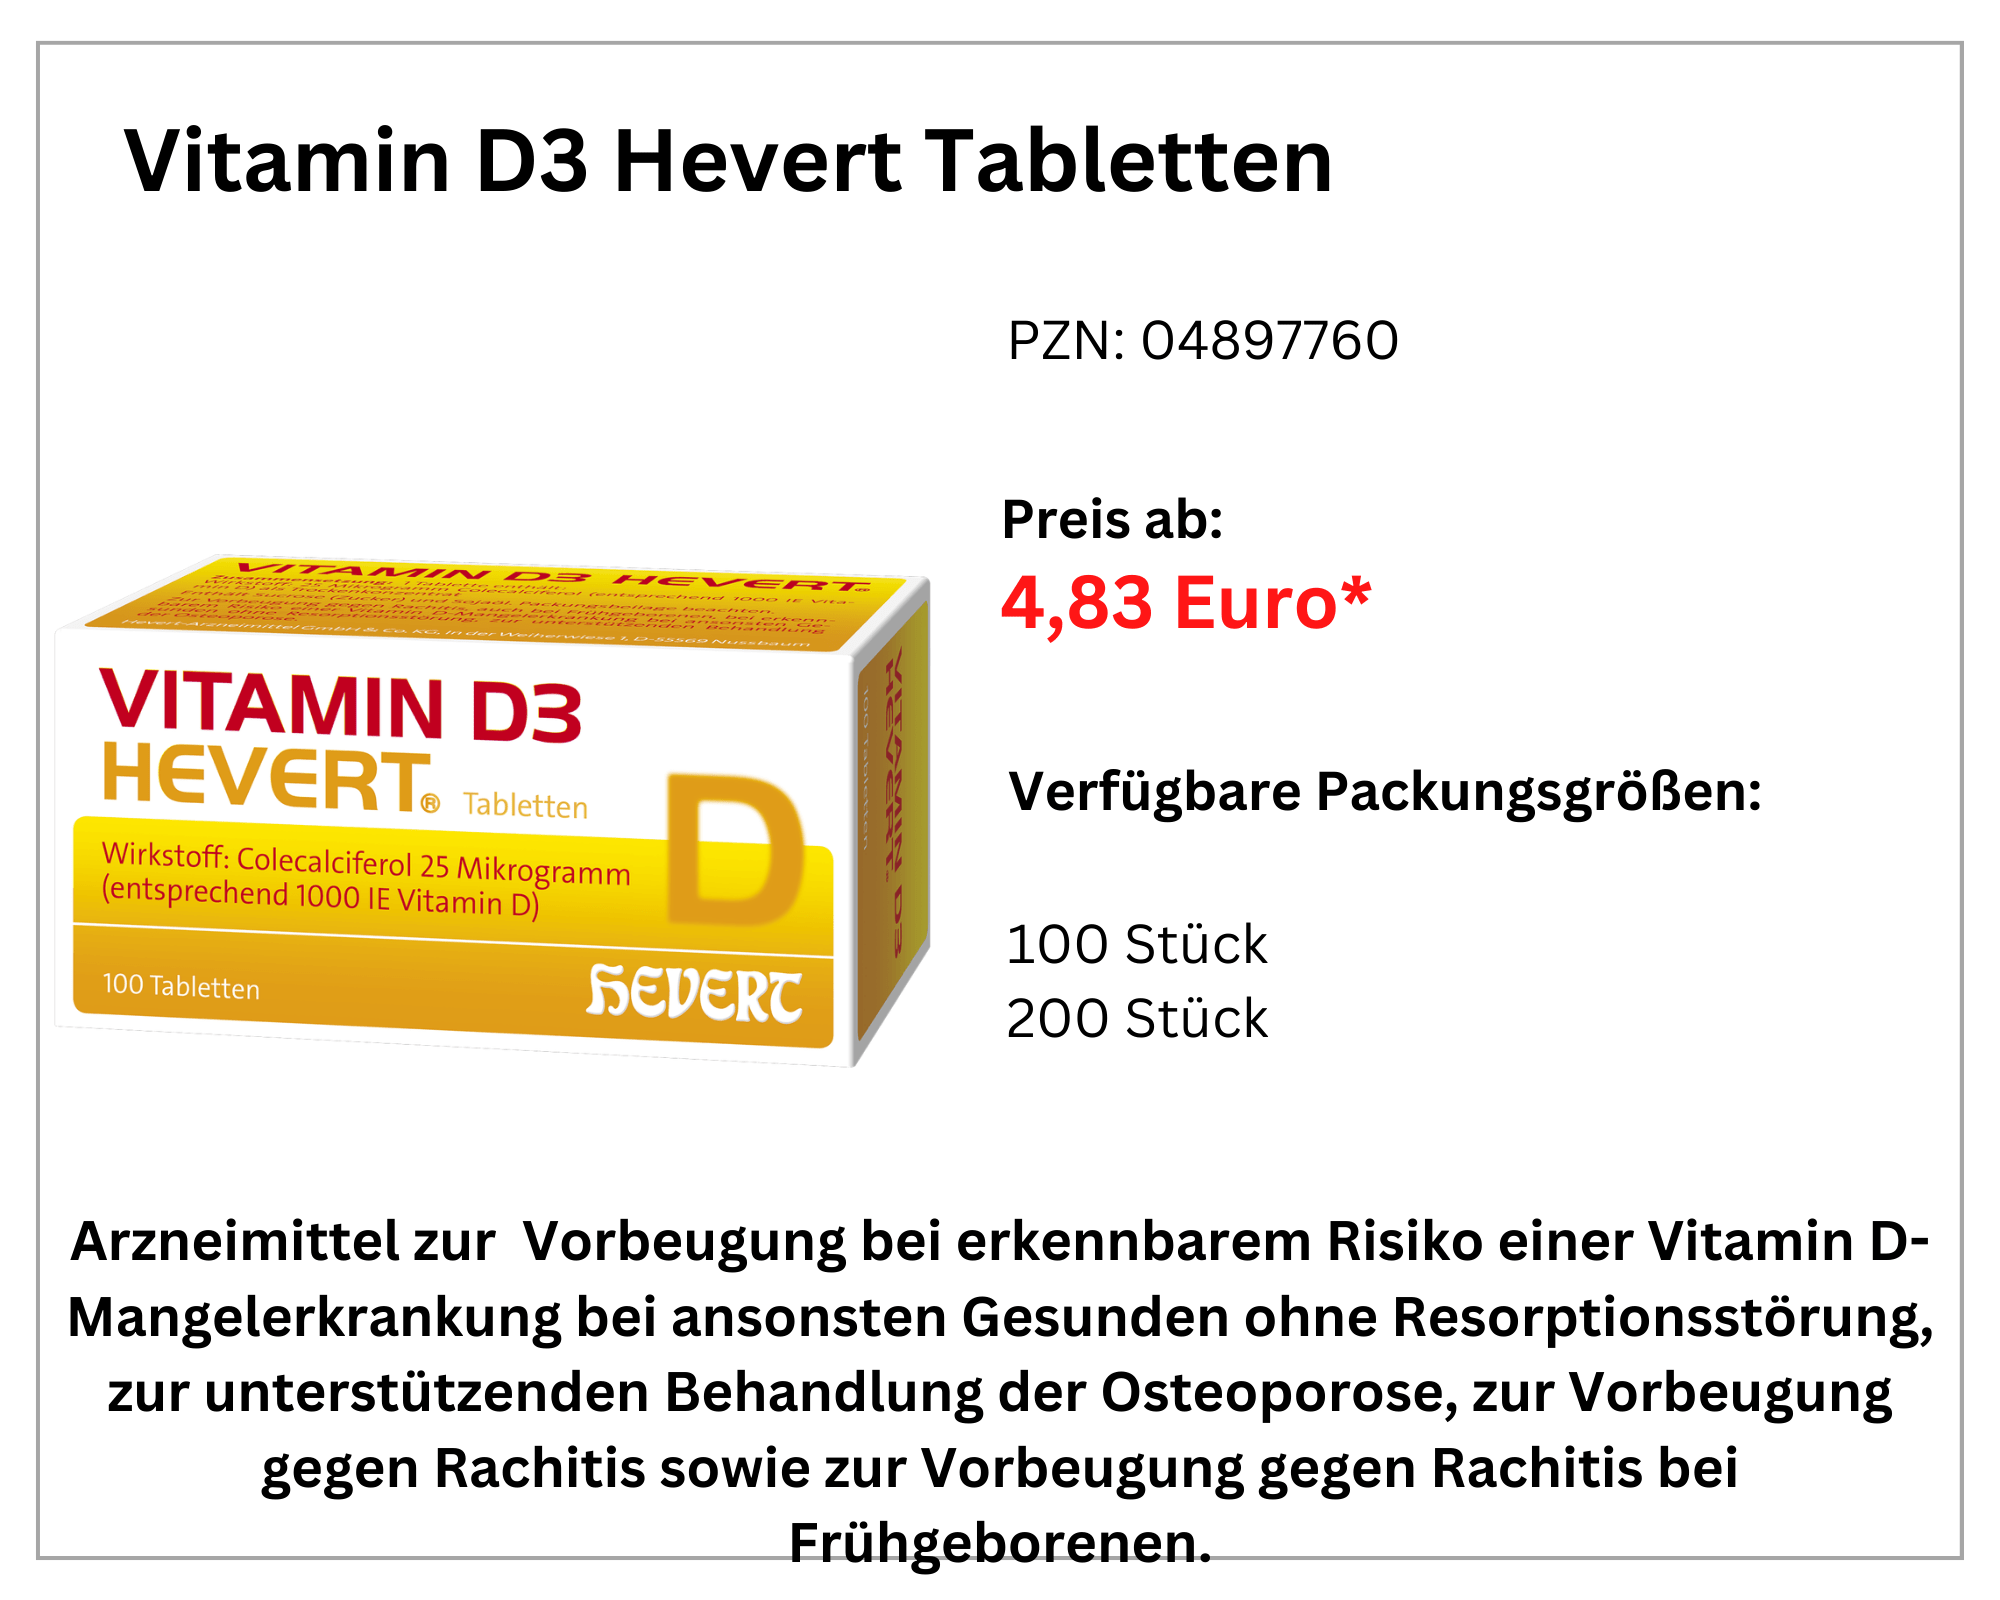 Vitamin D3 Hevert Tbaletten